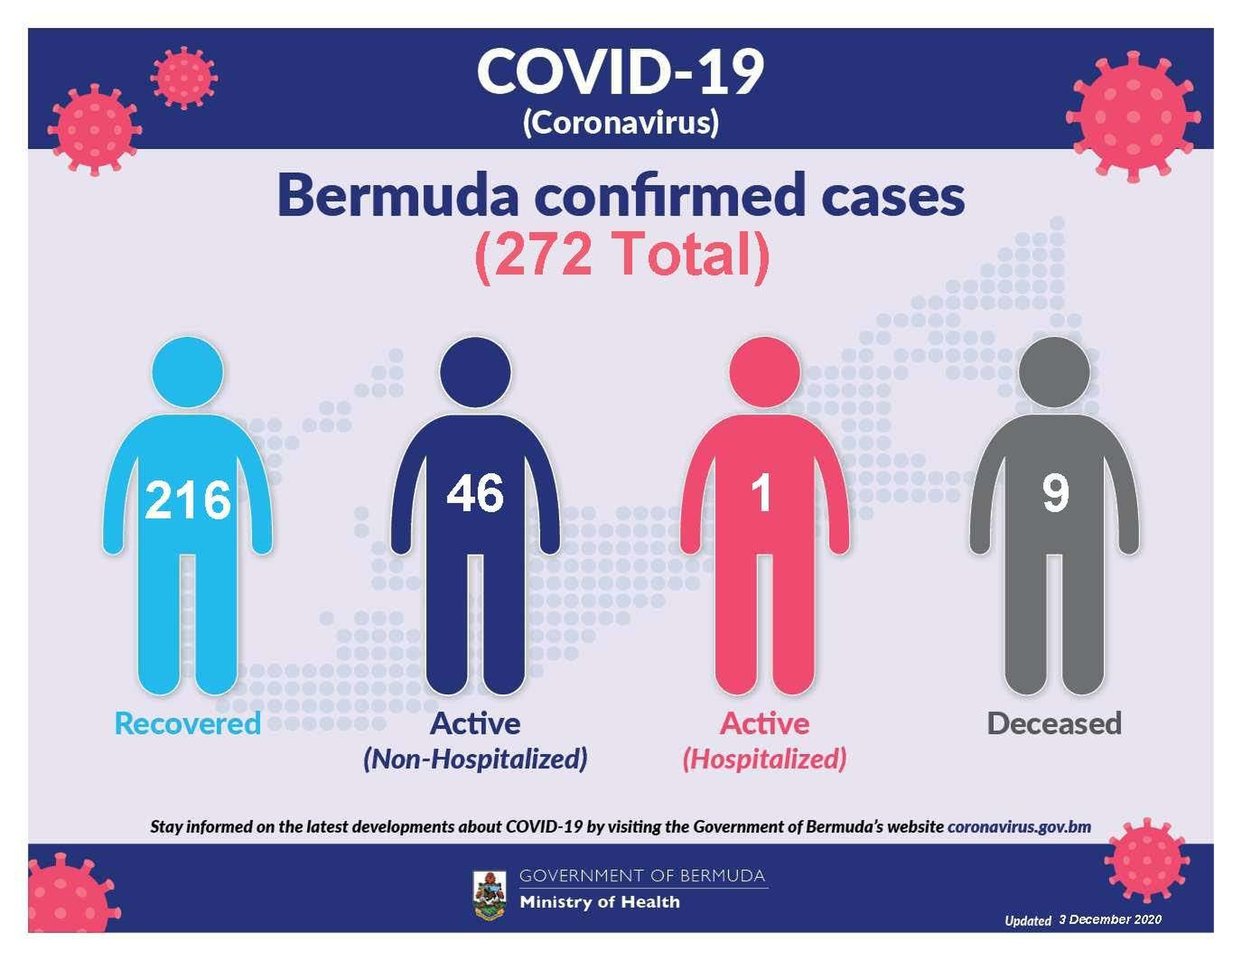 5 new COVID-19 cases reported in Bermuda, 3 December